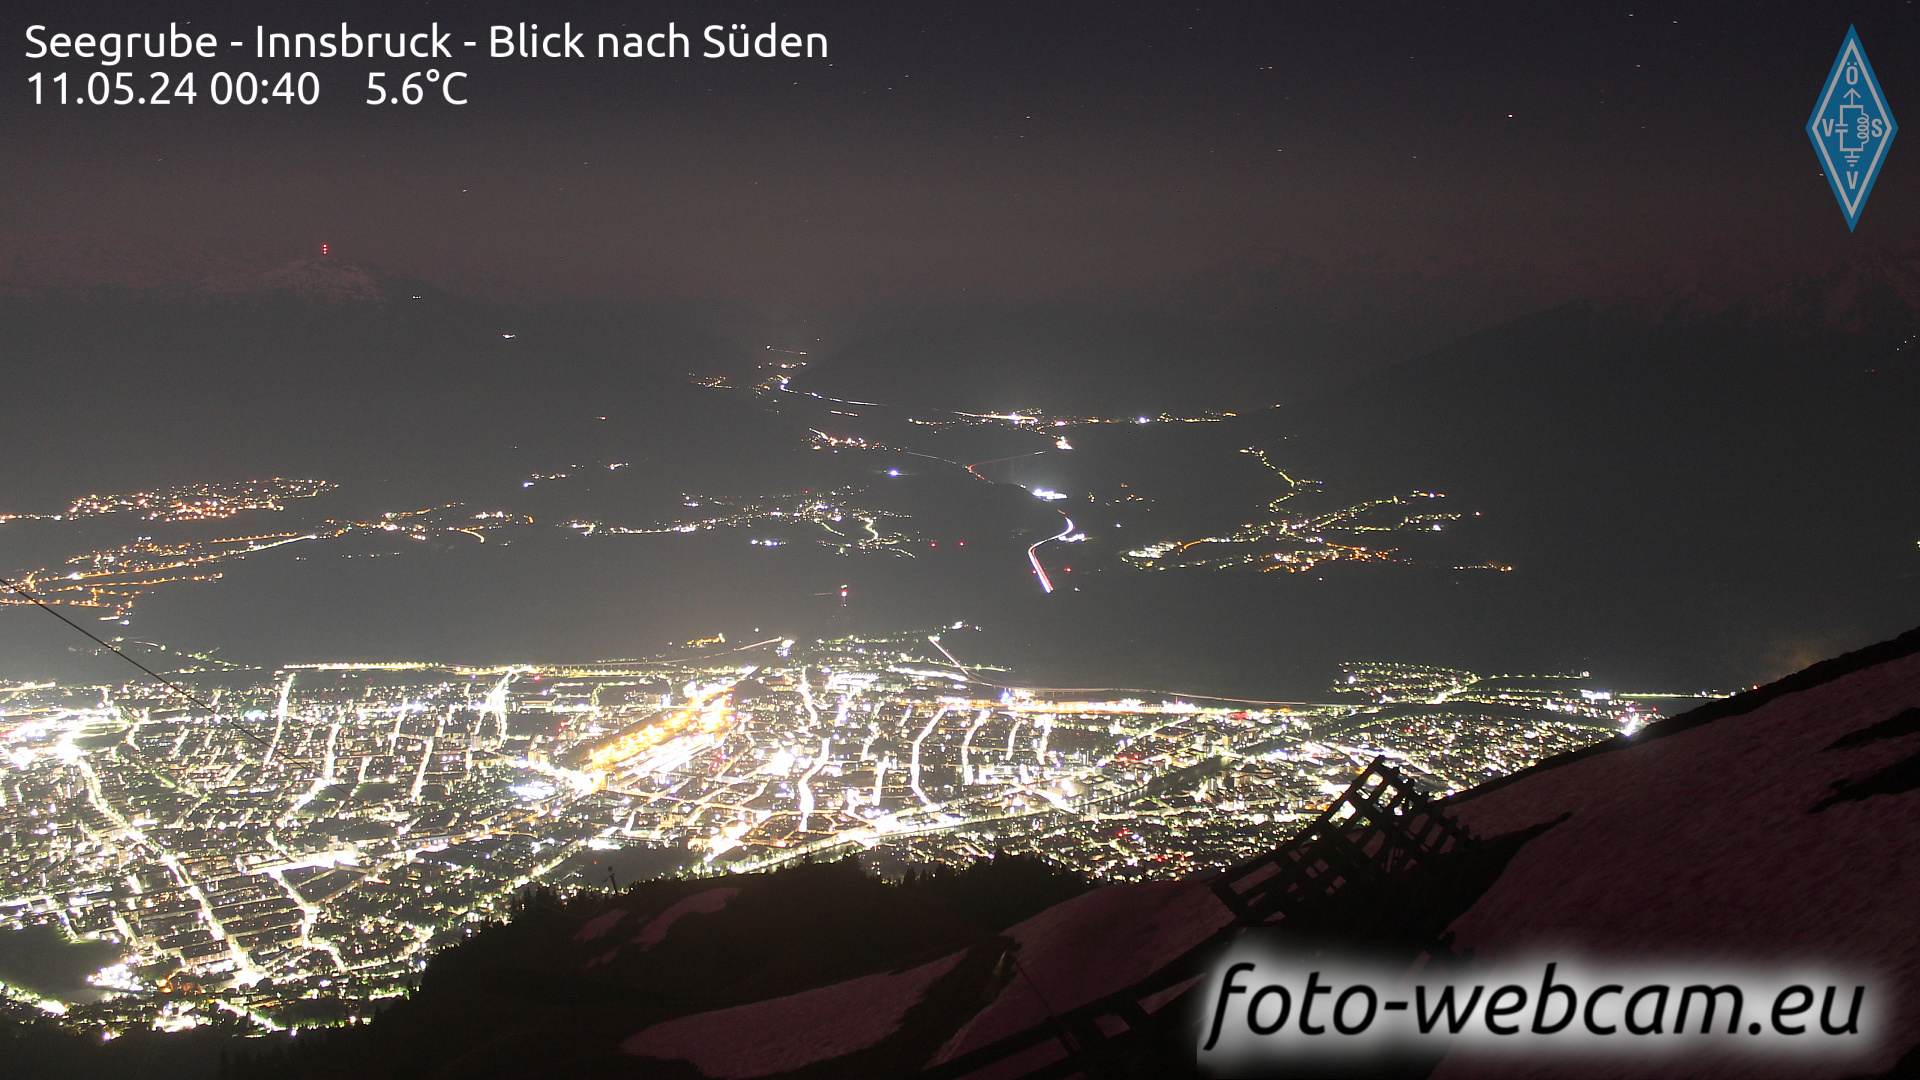 Innsbruck Fr. 00:48